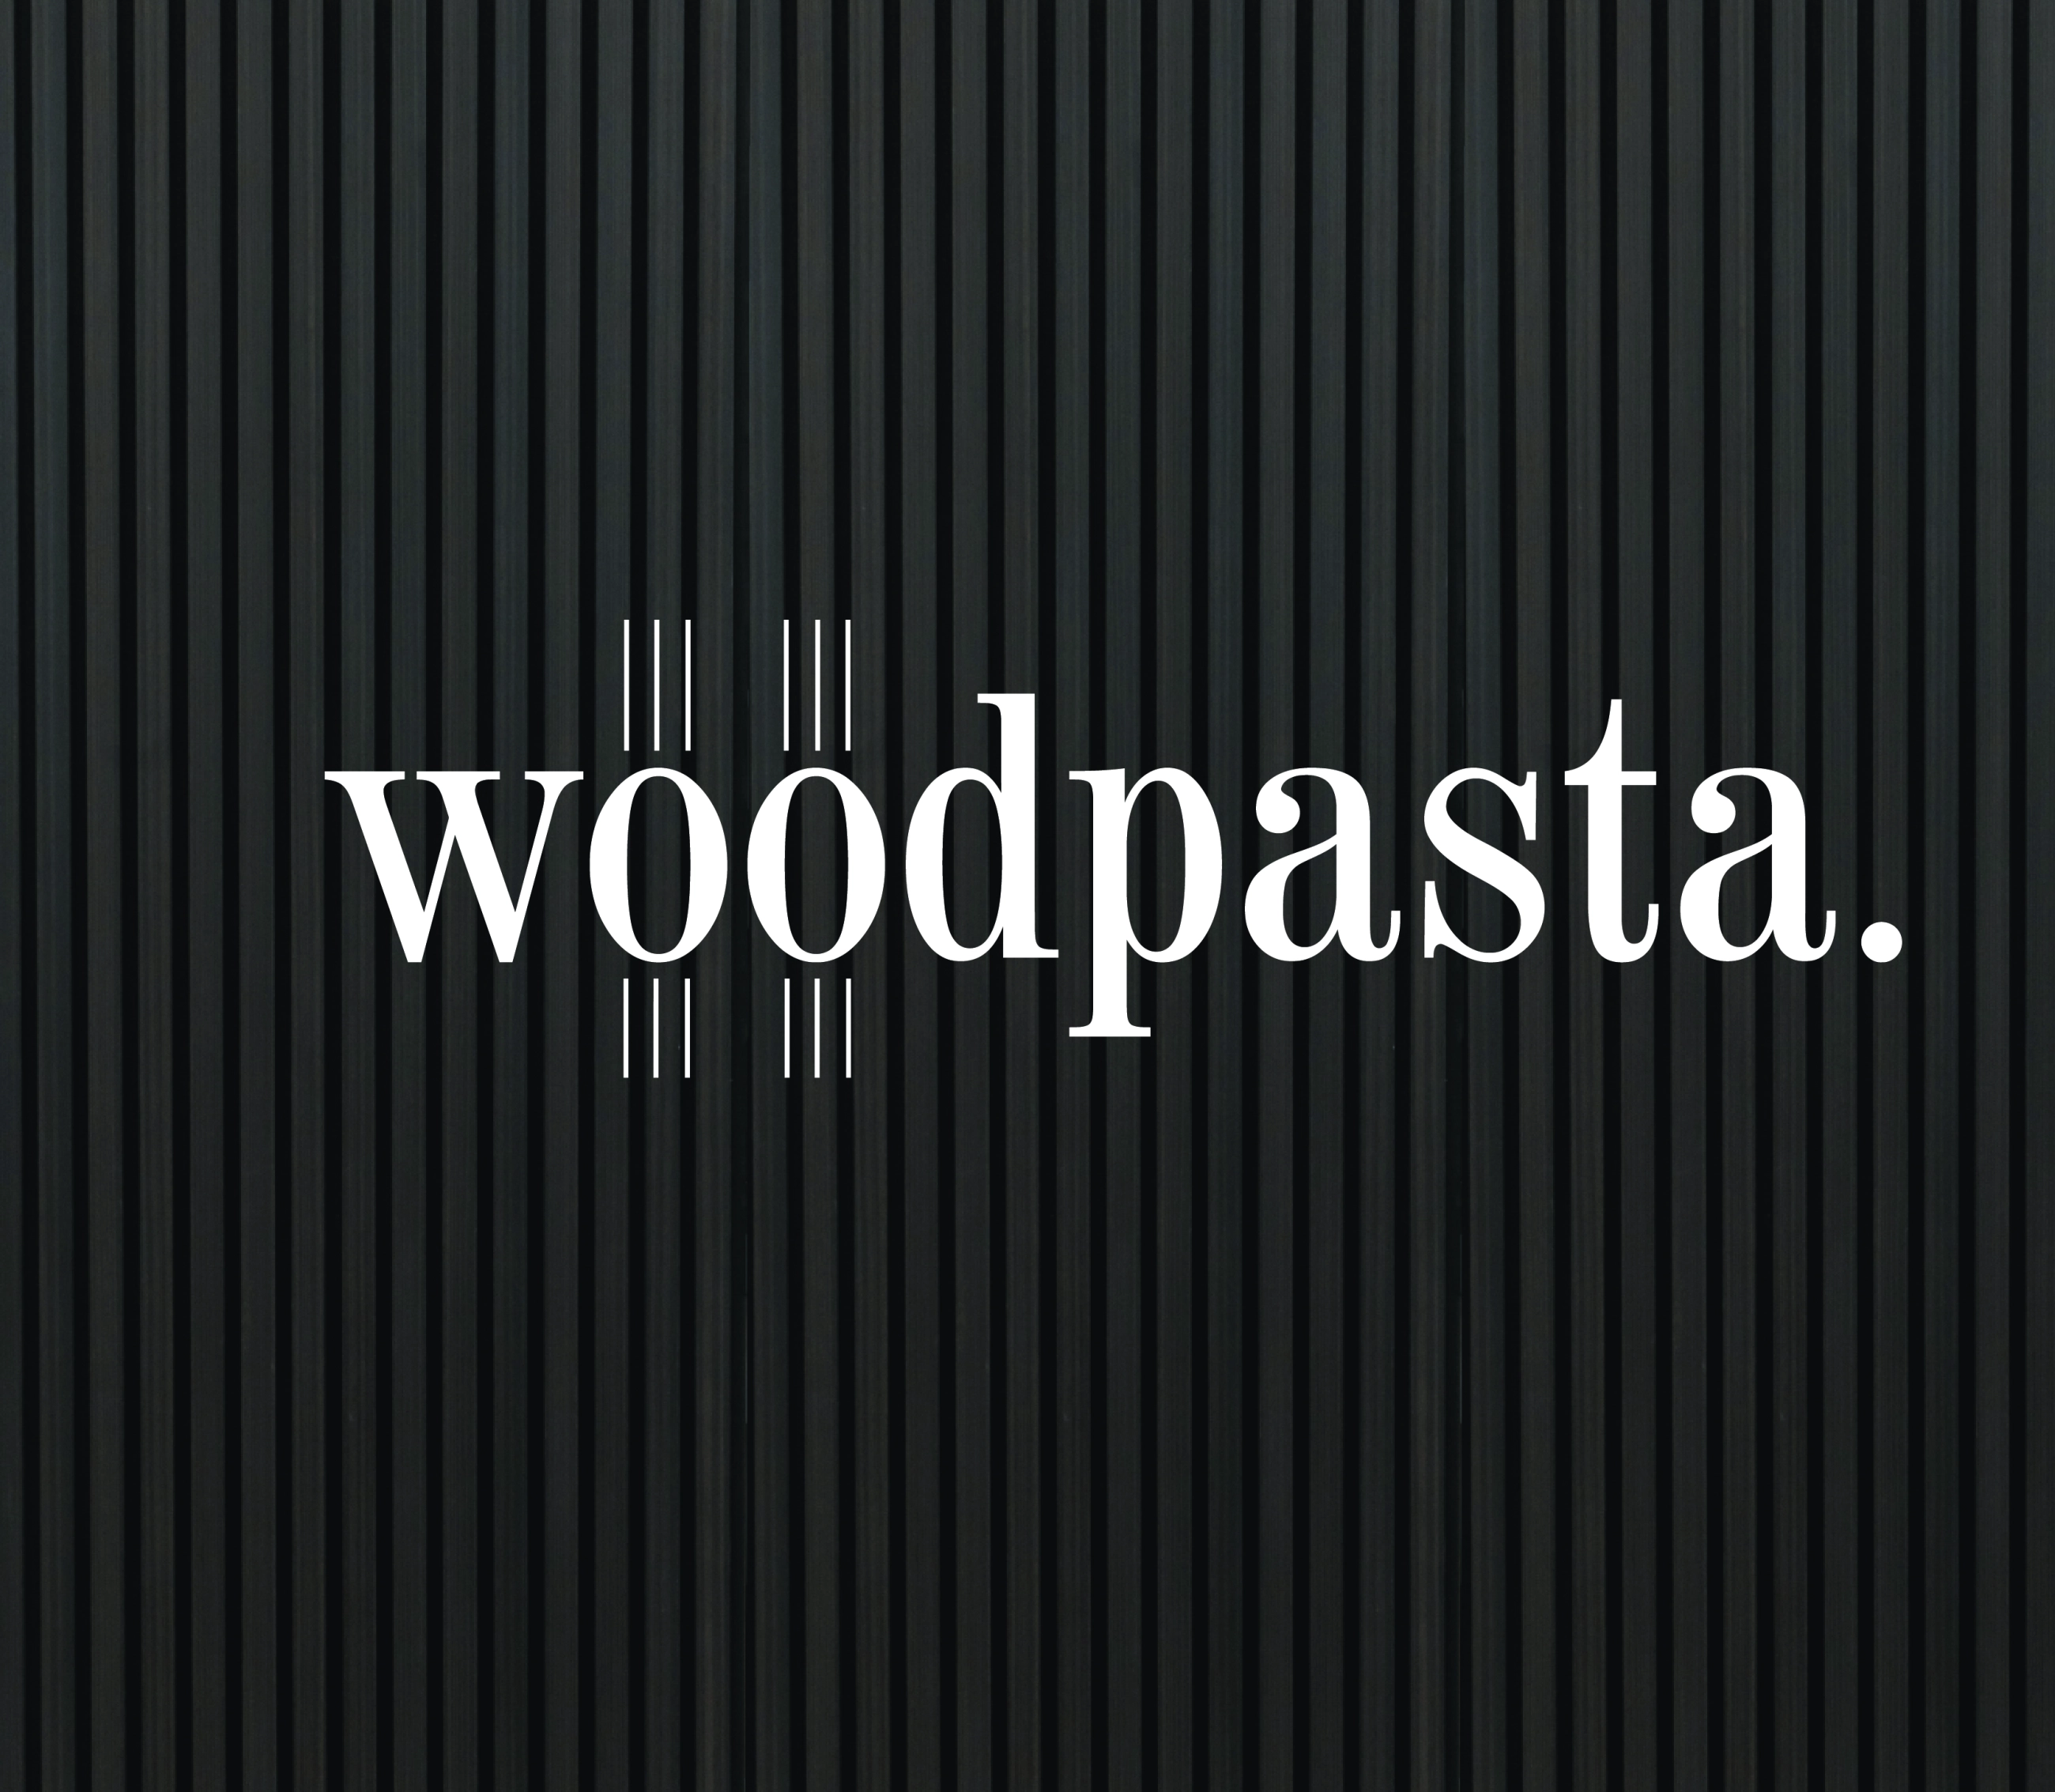 Woodpasta